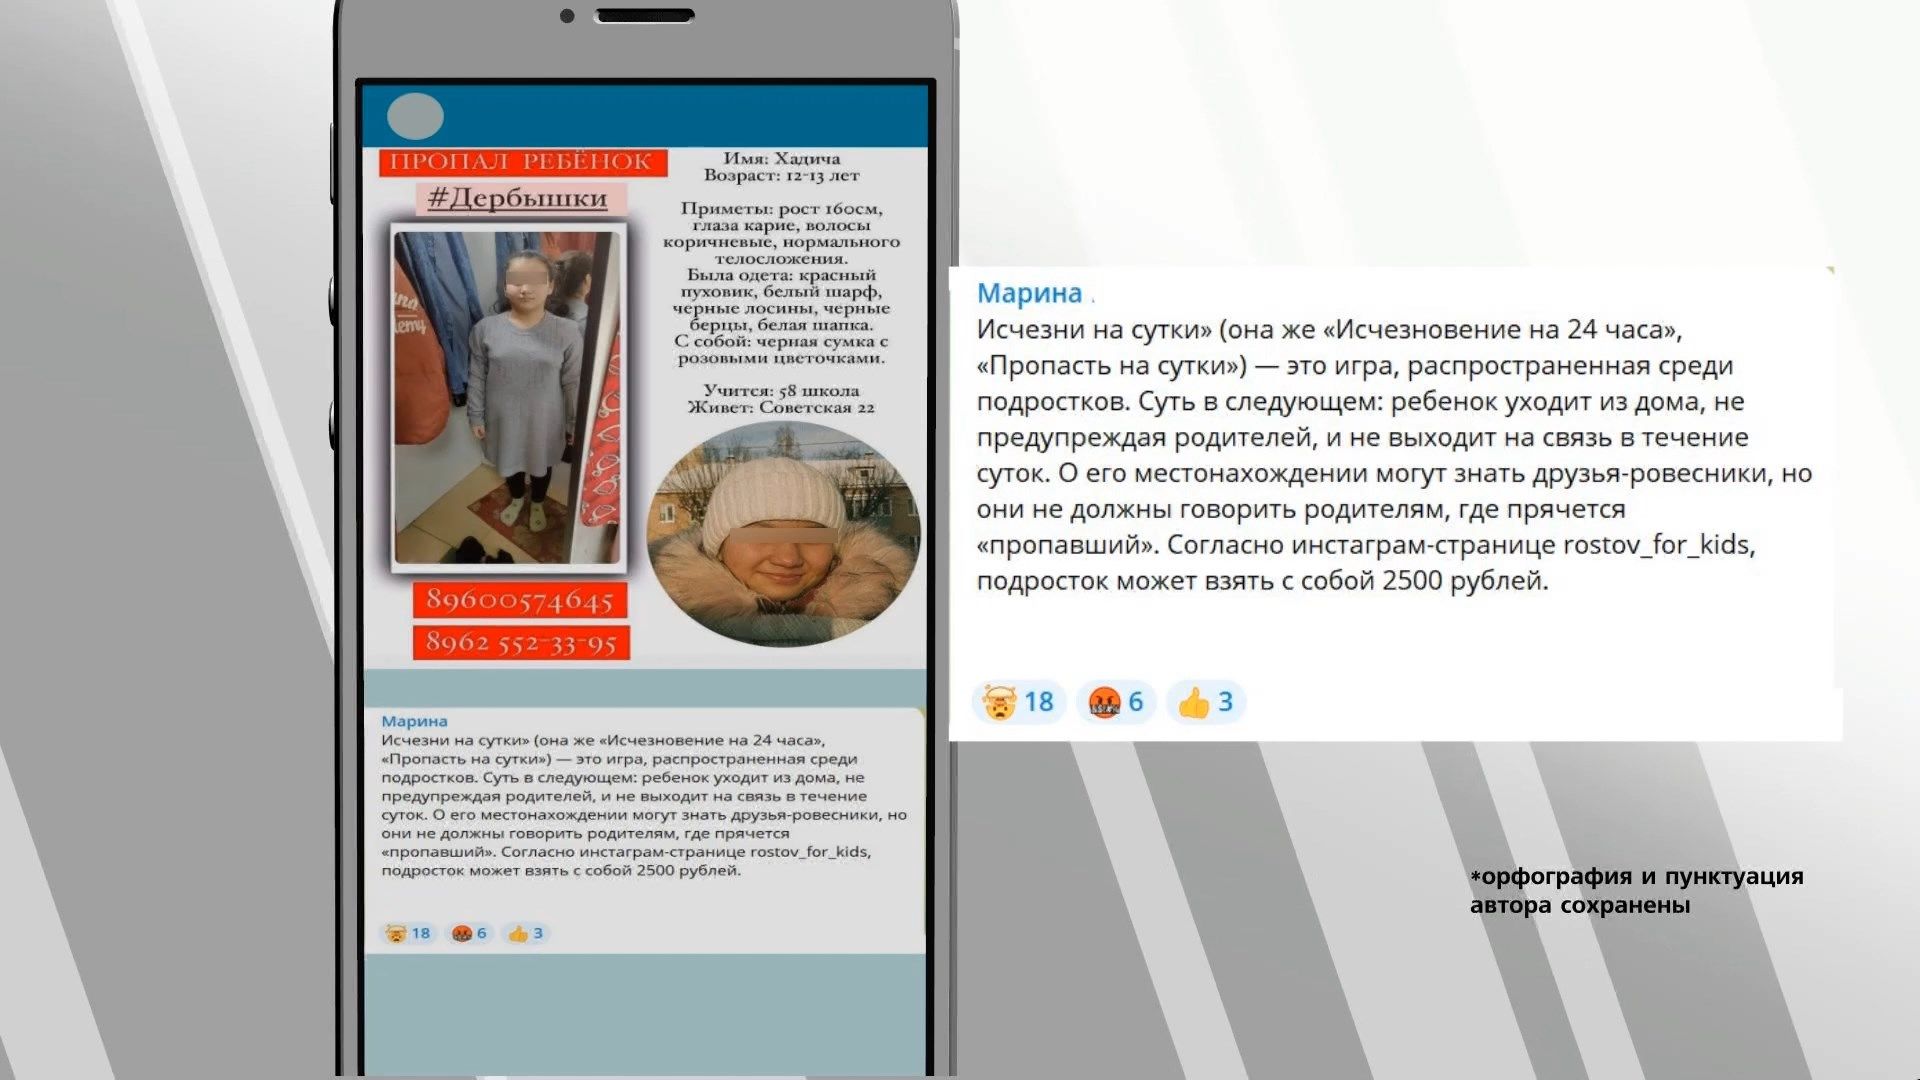 Исчезновение на 24 часа: в Казани участились случаи пропажи детей